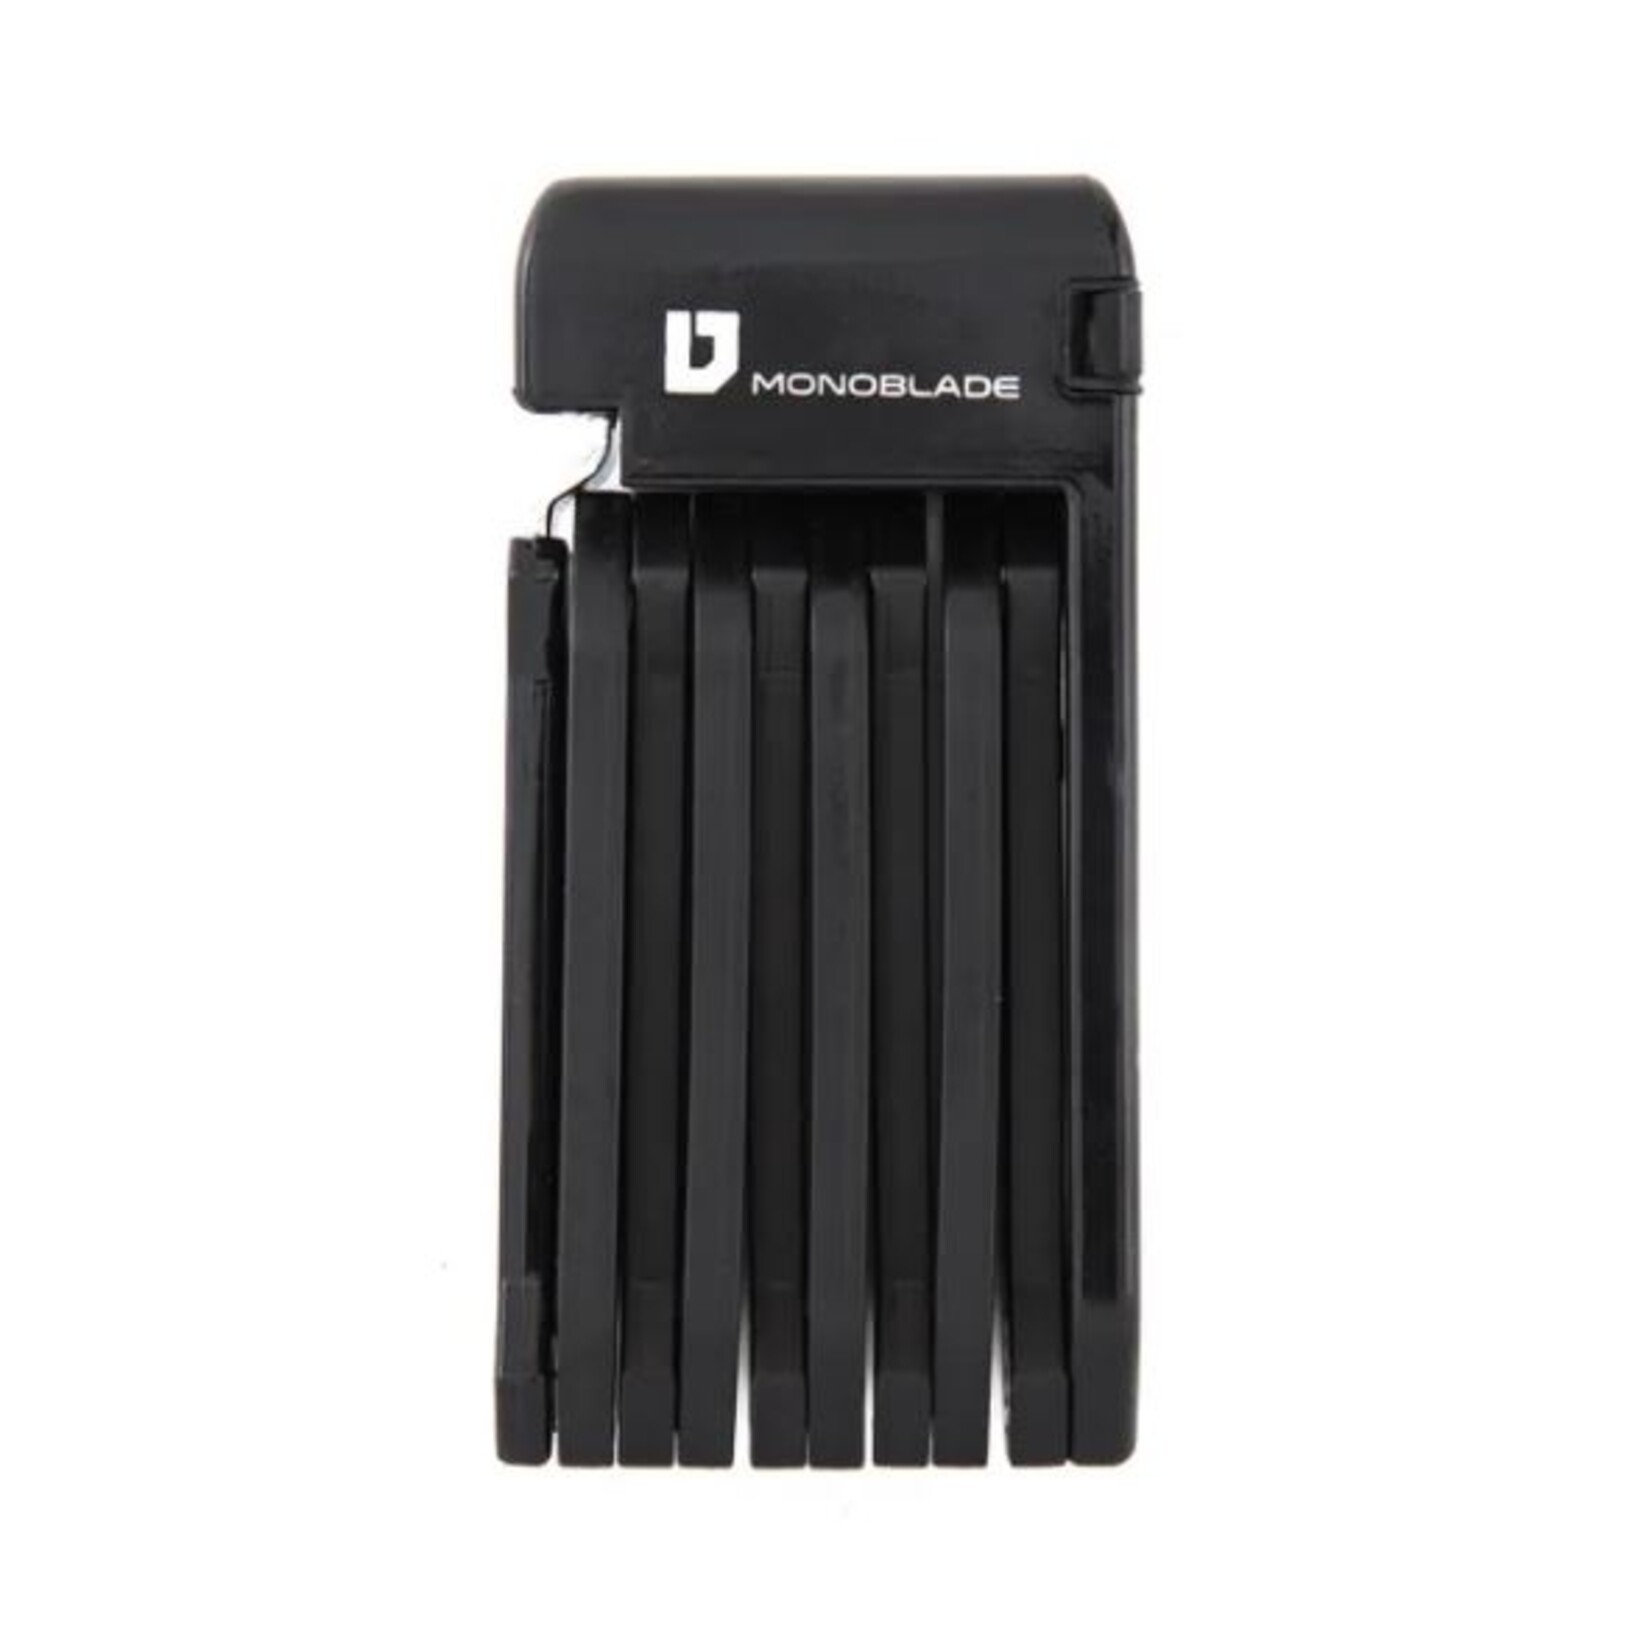 ULAC ULAC Monoblade Pocket Folding Lock 70cm Bike Lock - Black Portable